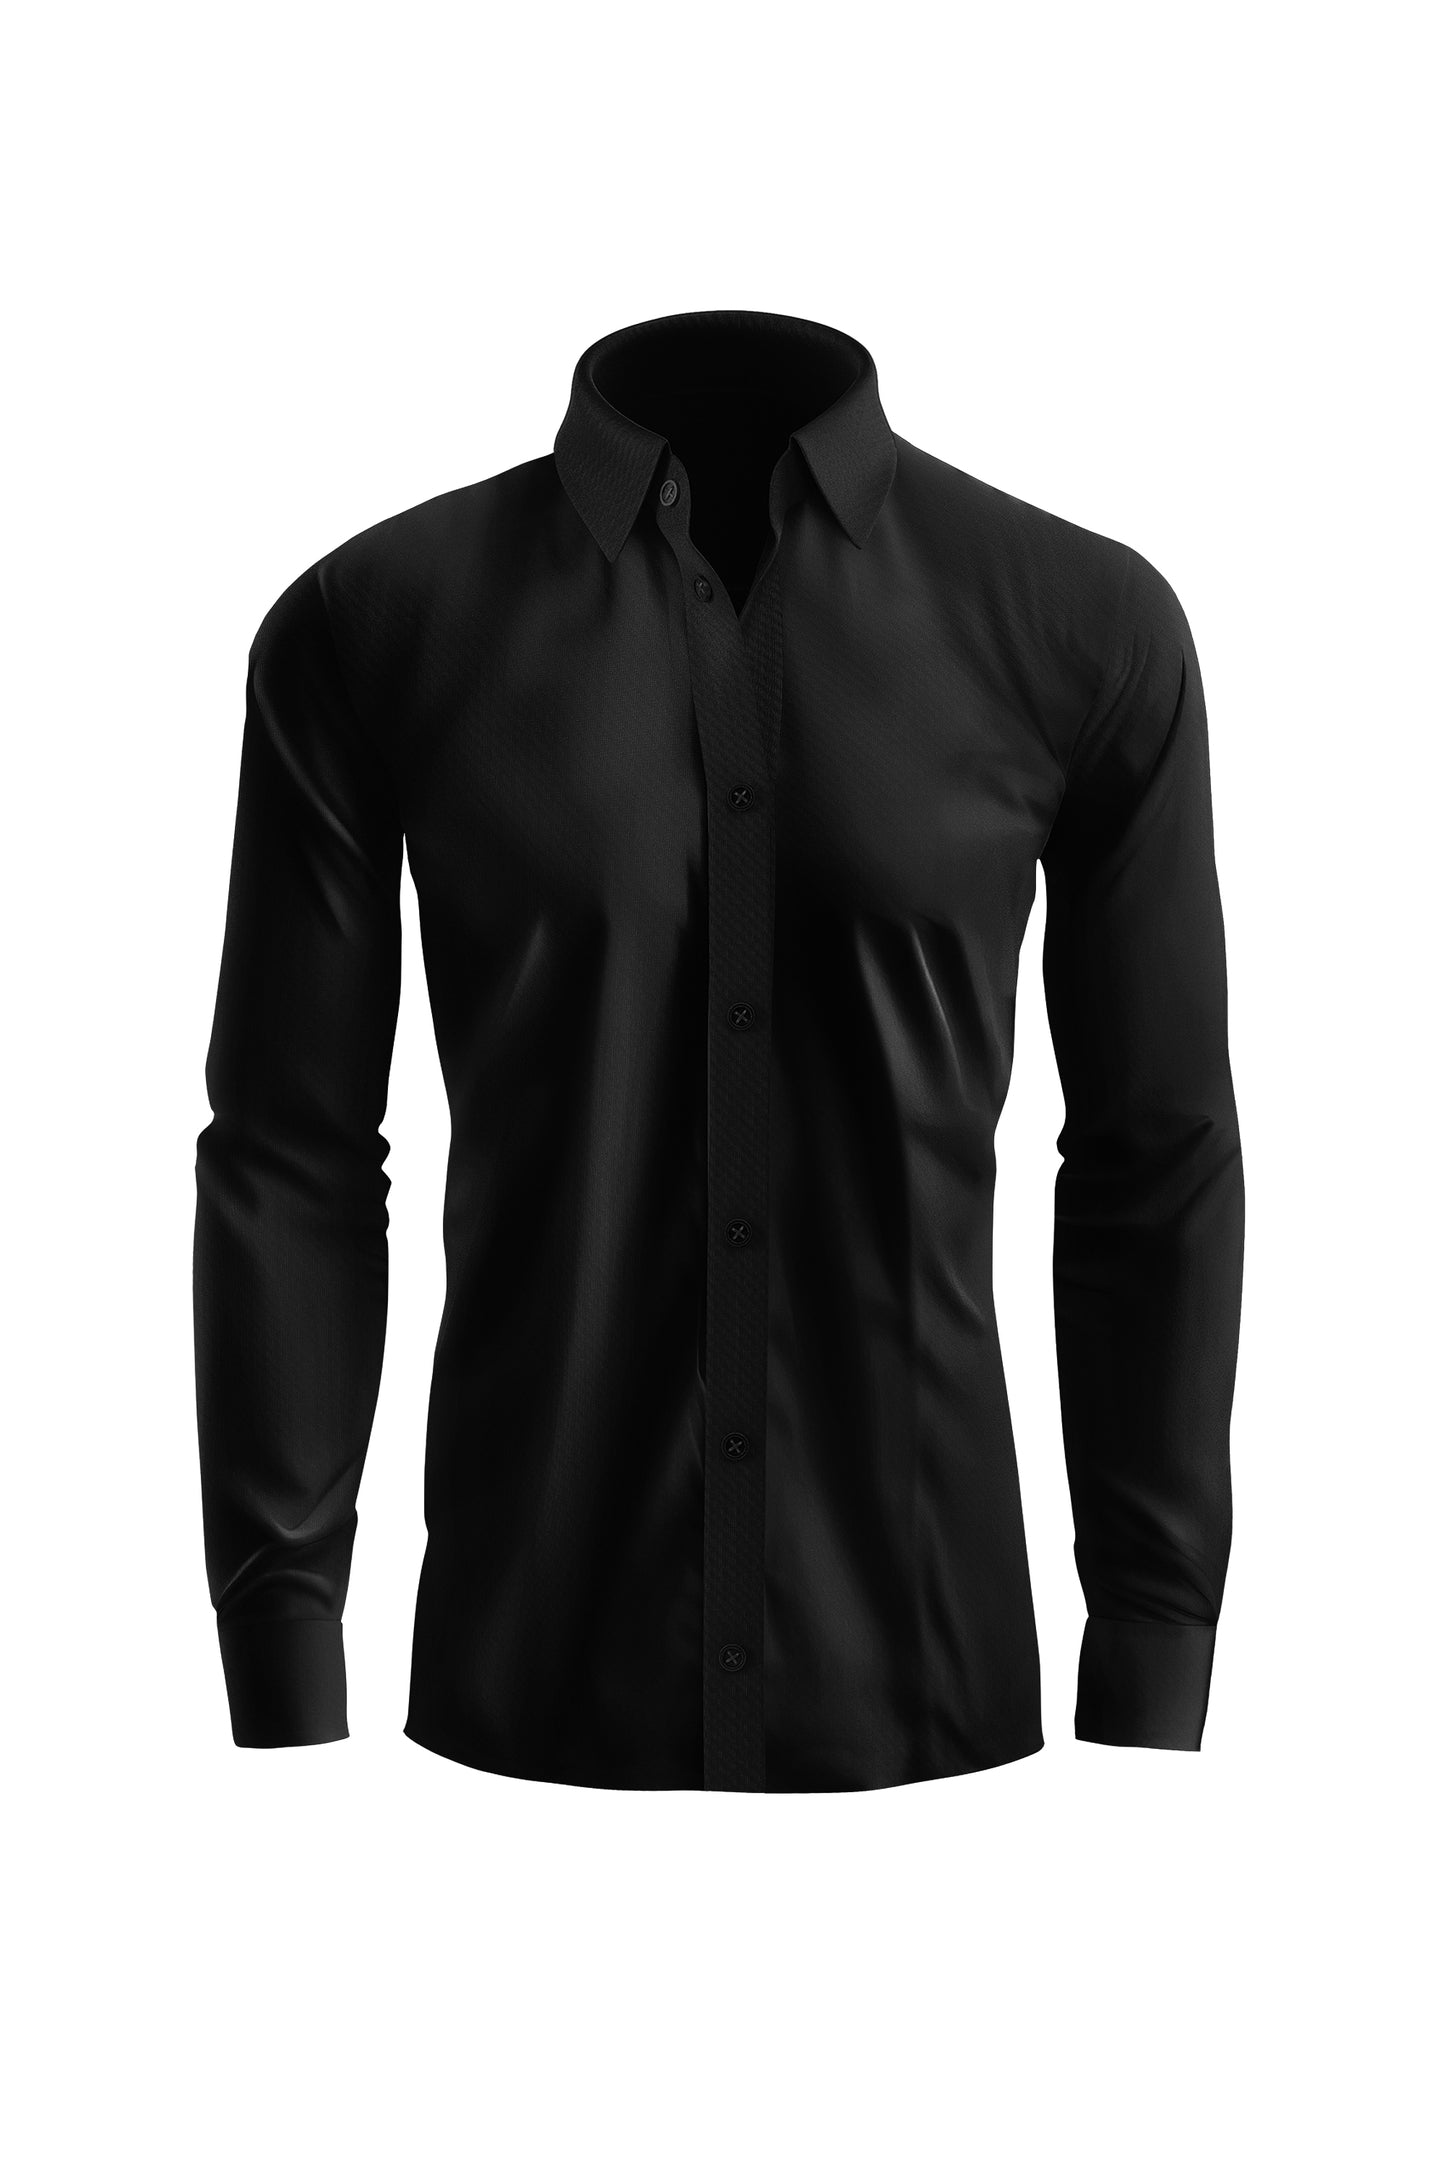 VERCINI plain black shirt VERCINI COLLAR SHIRTS Casual Shirts Vercini